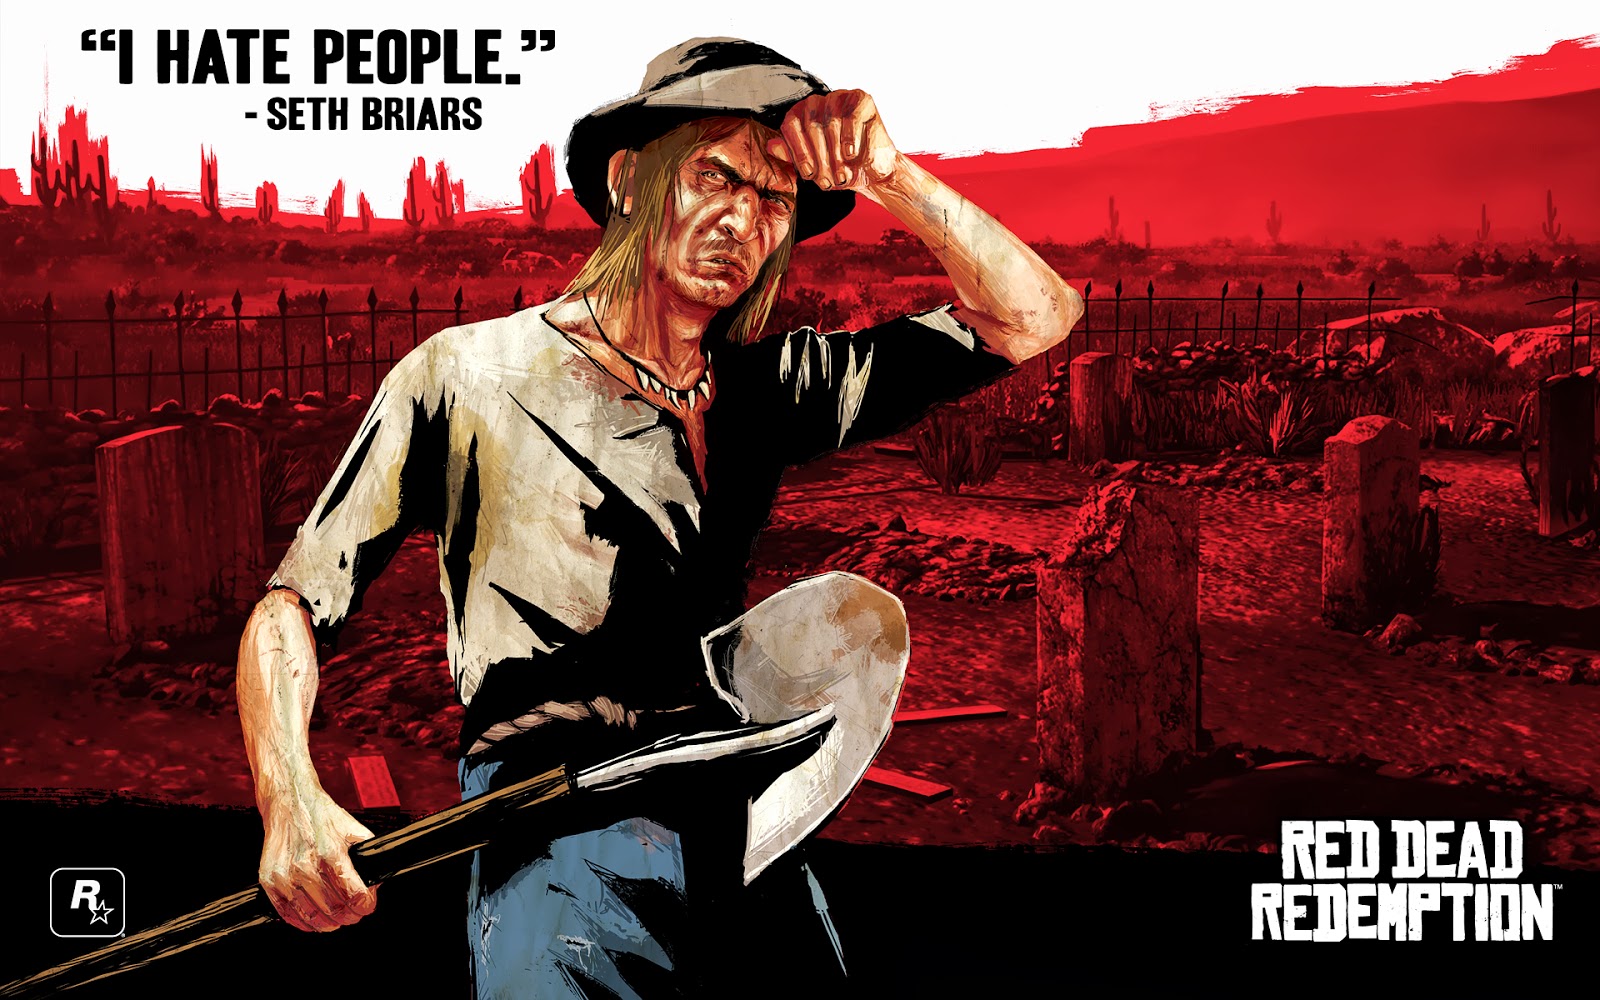 Red Dead Redemption Wallpaper